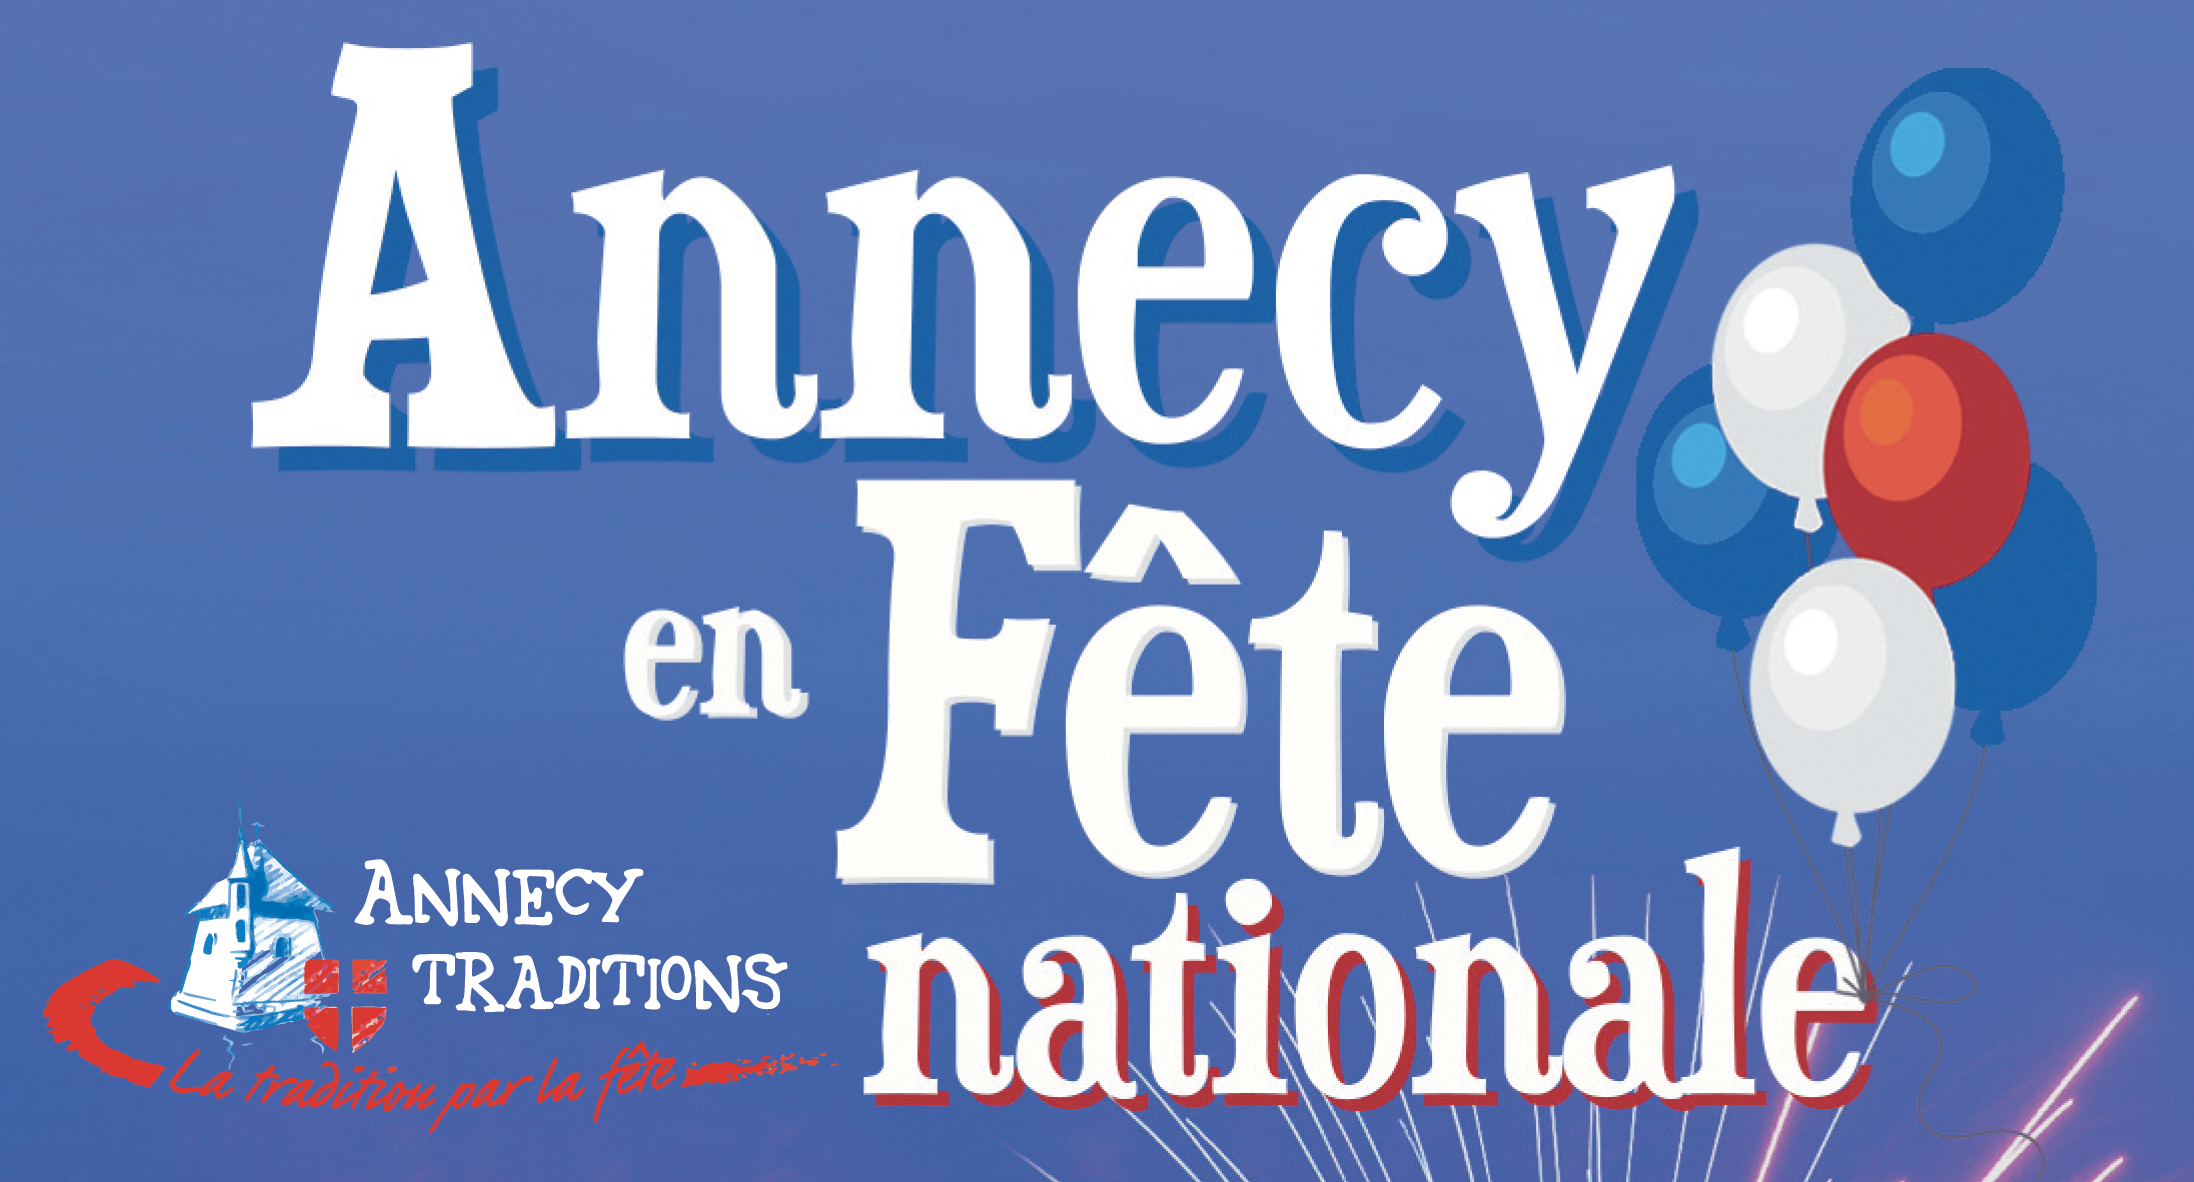 Annecy En Fête Nationale